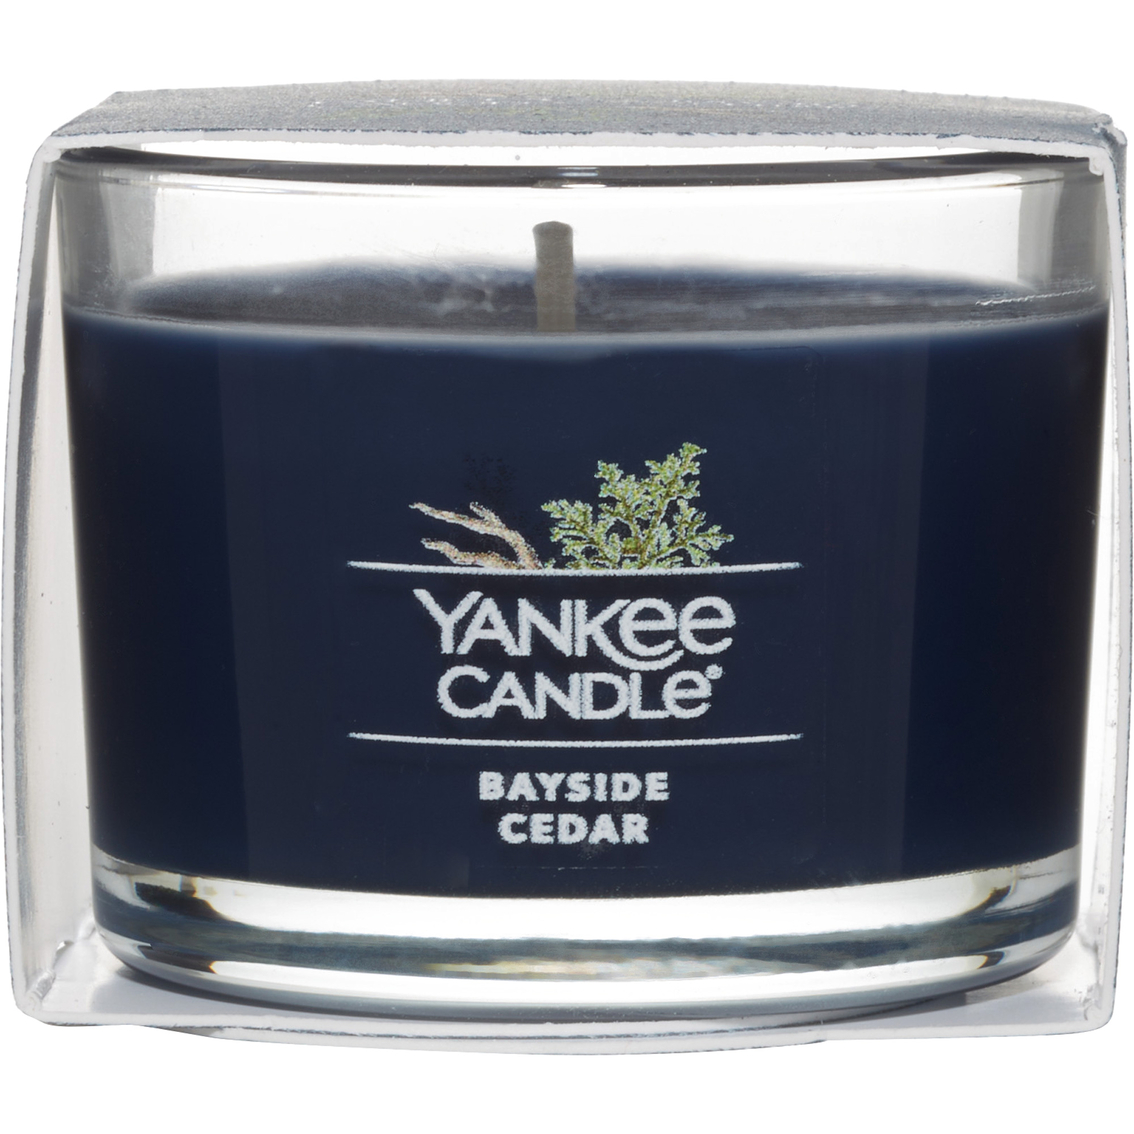 Yankee Candle Bayside Cedar Filled Votive Mini Candle